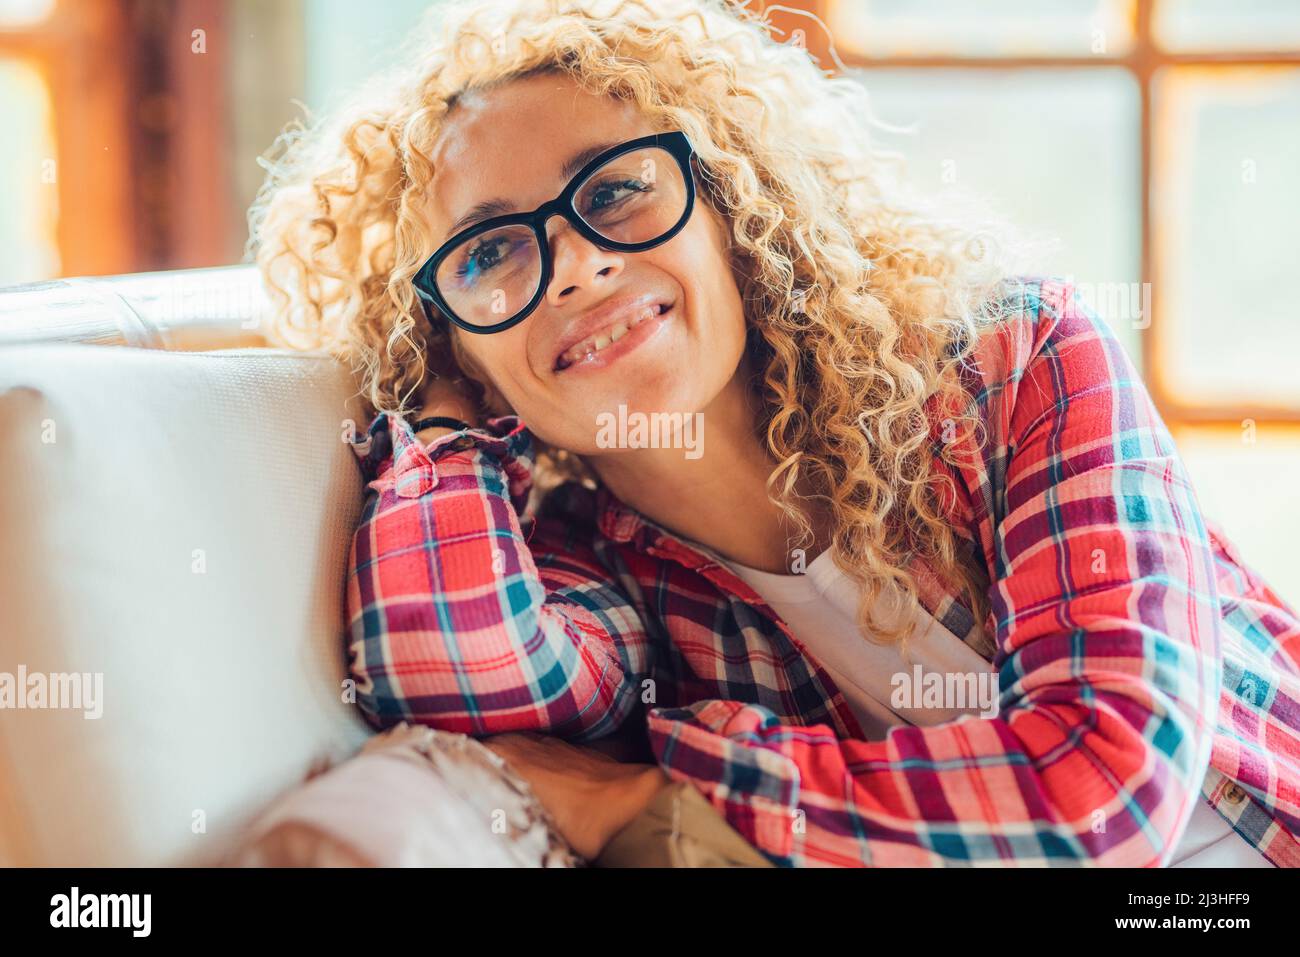 Woman, blonde, curls, check shirt, armchair, comfortable, sitting, smile, portrait, Stock Photo